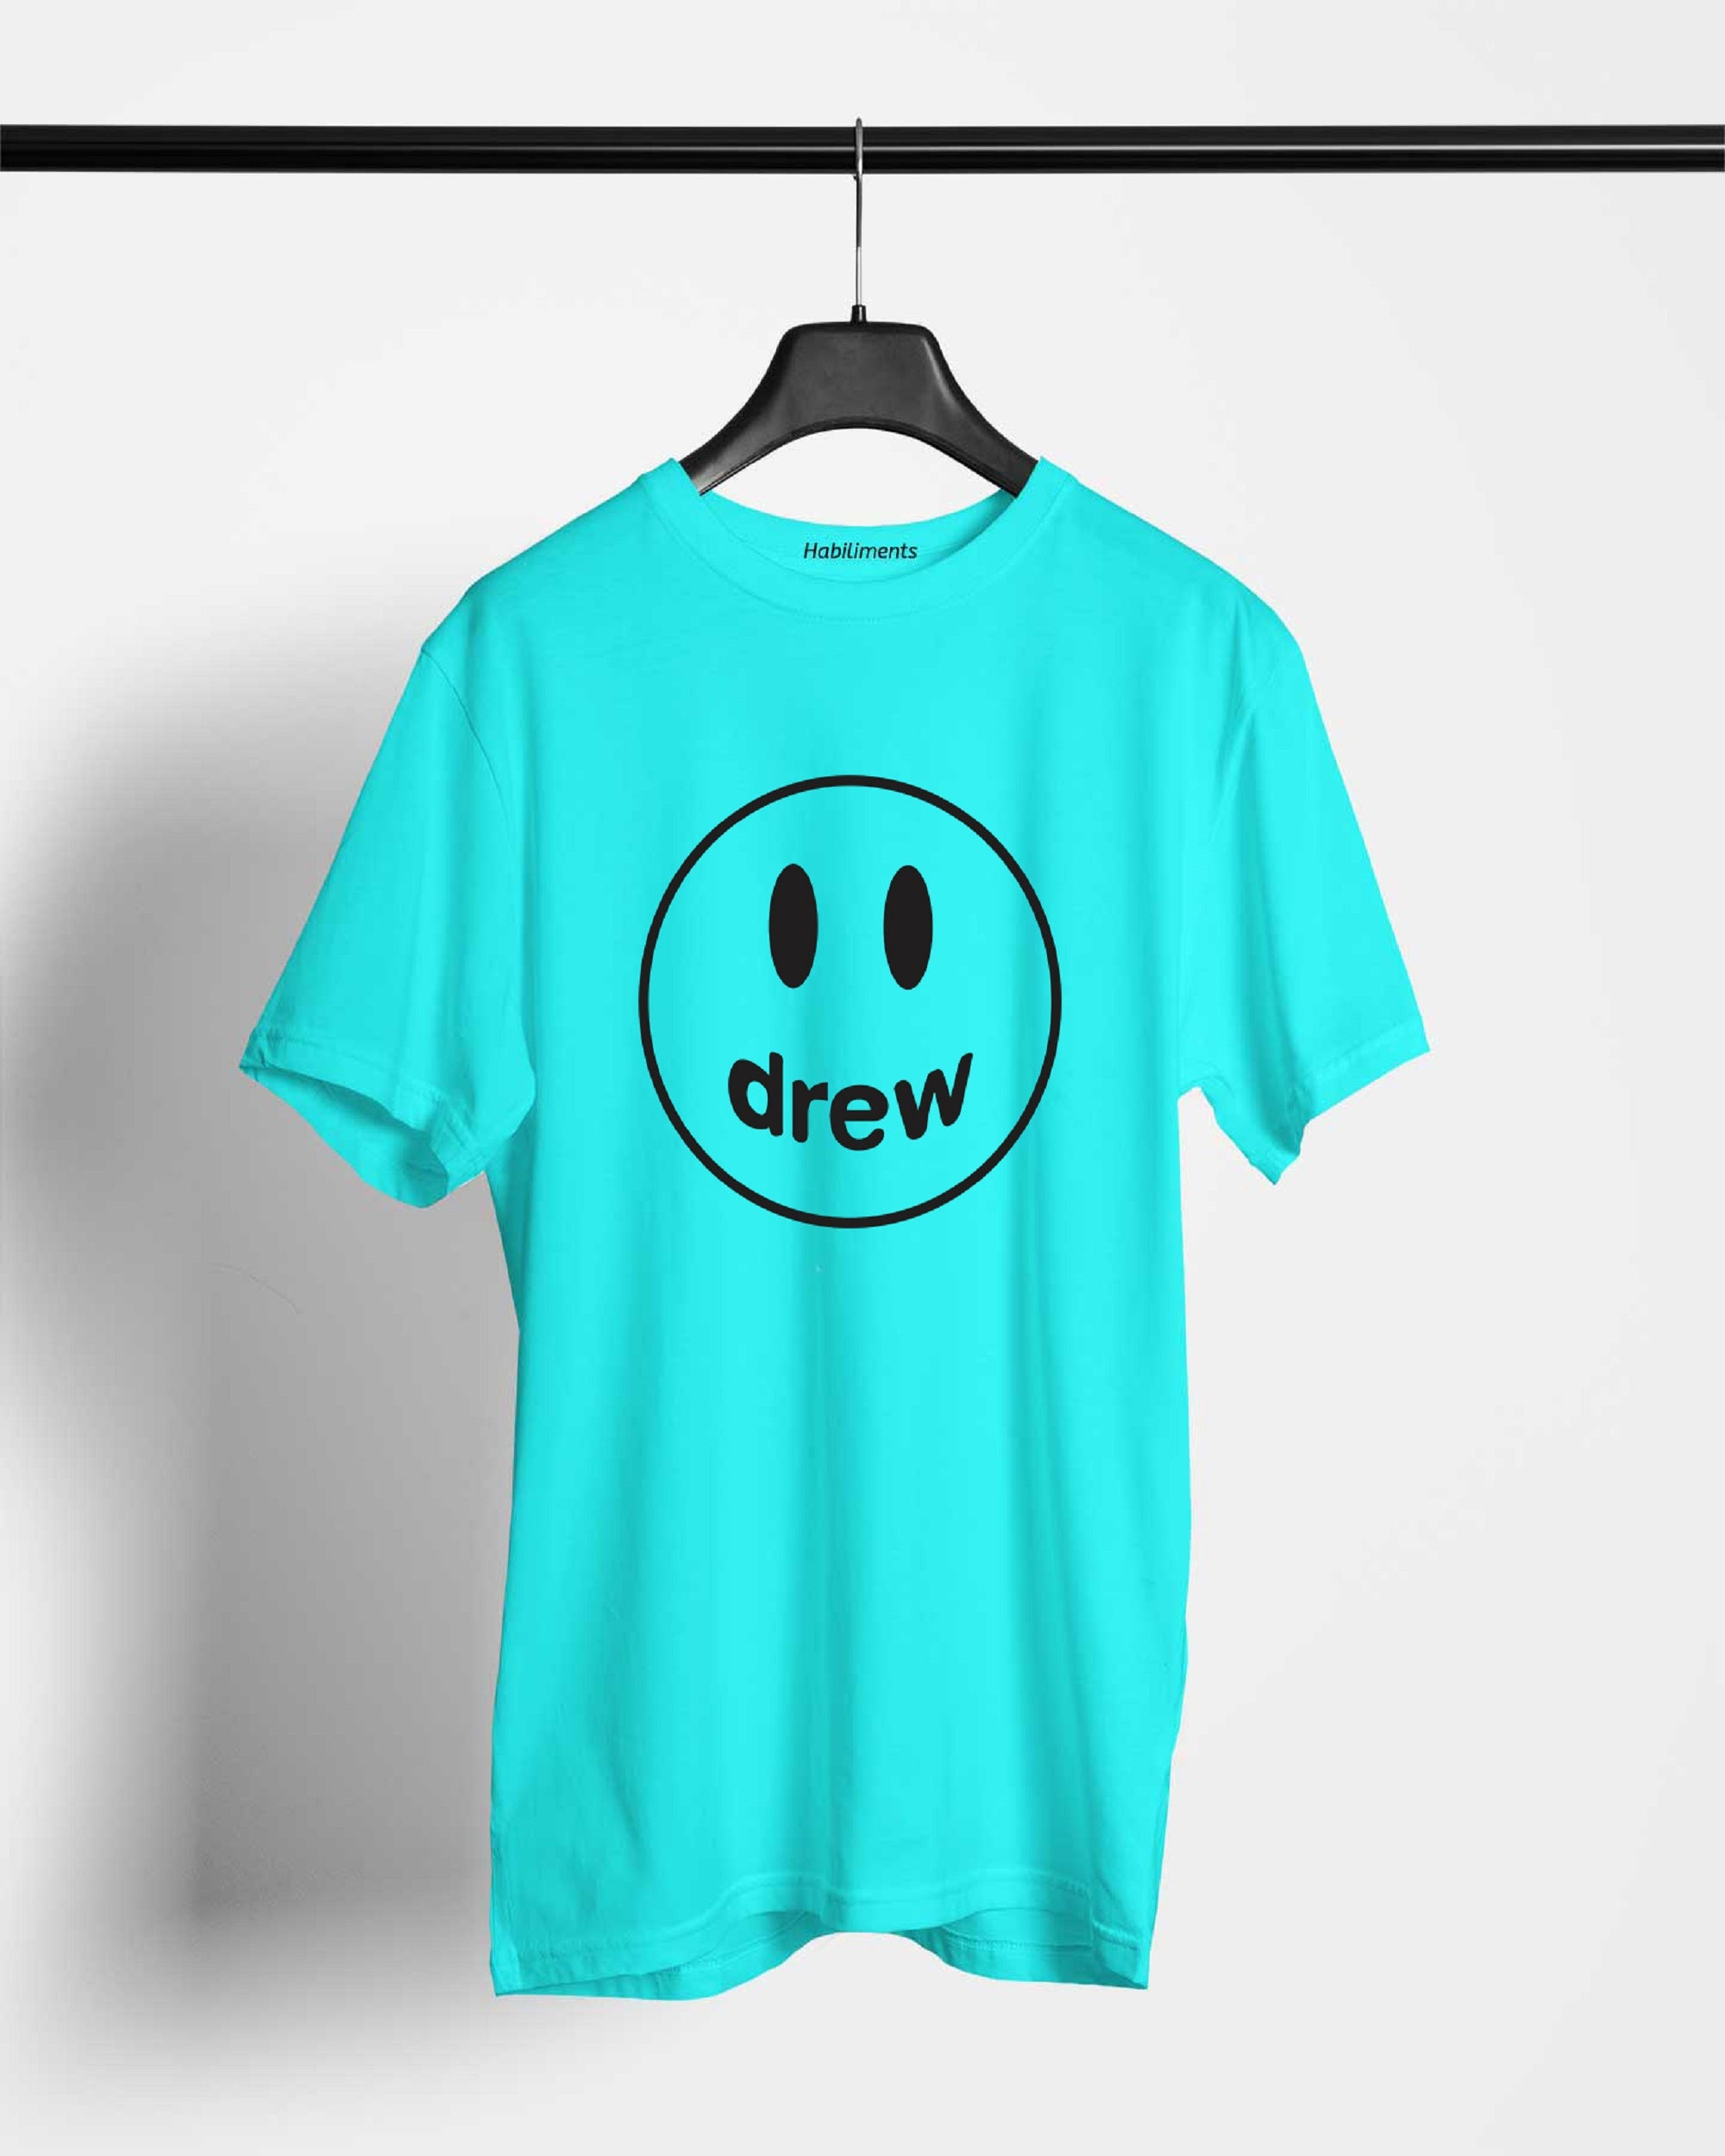 Drew T-Shirts For Men || Sky Blue || Stylish Tshirts || 100% Cotton || Best T-Shirt For Men's